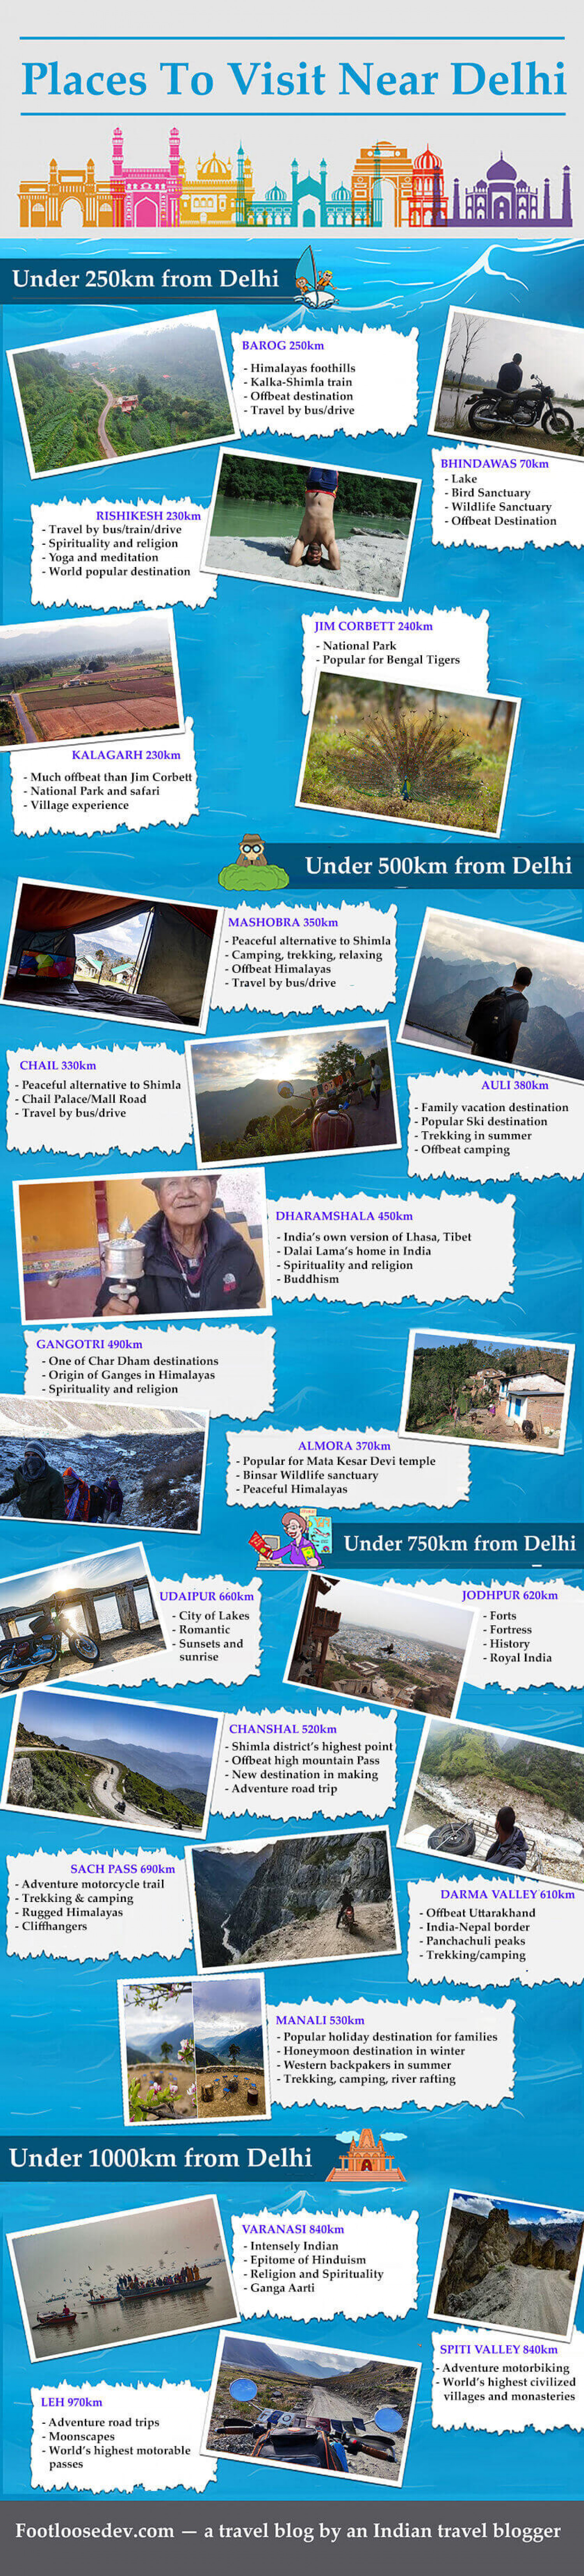 Best Places to visit near Delhi Infographic